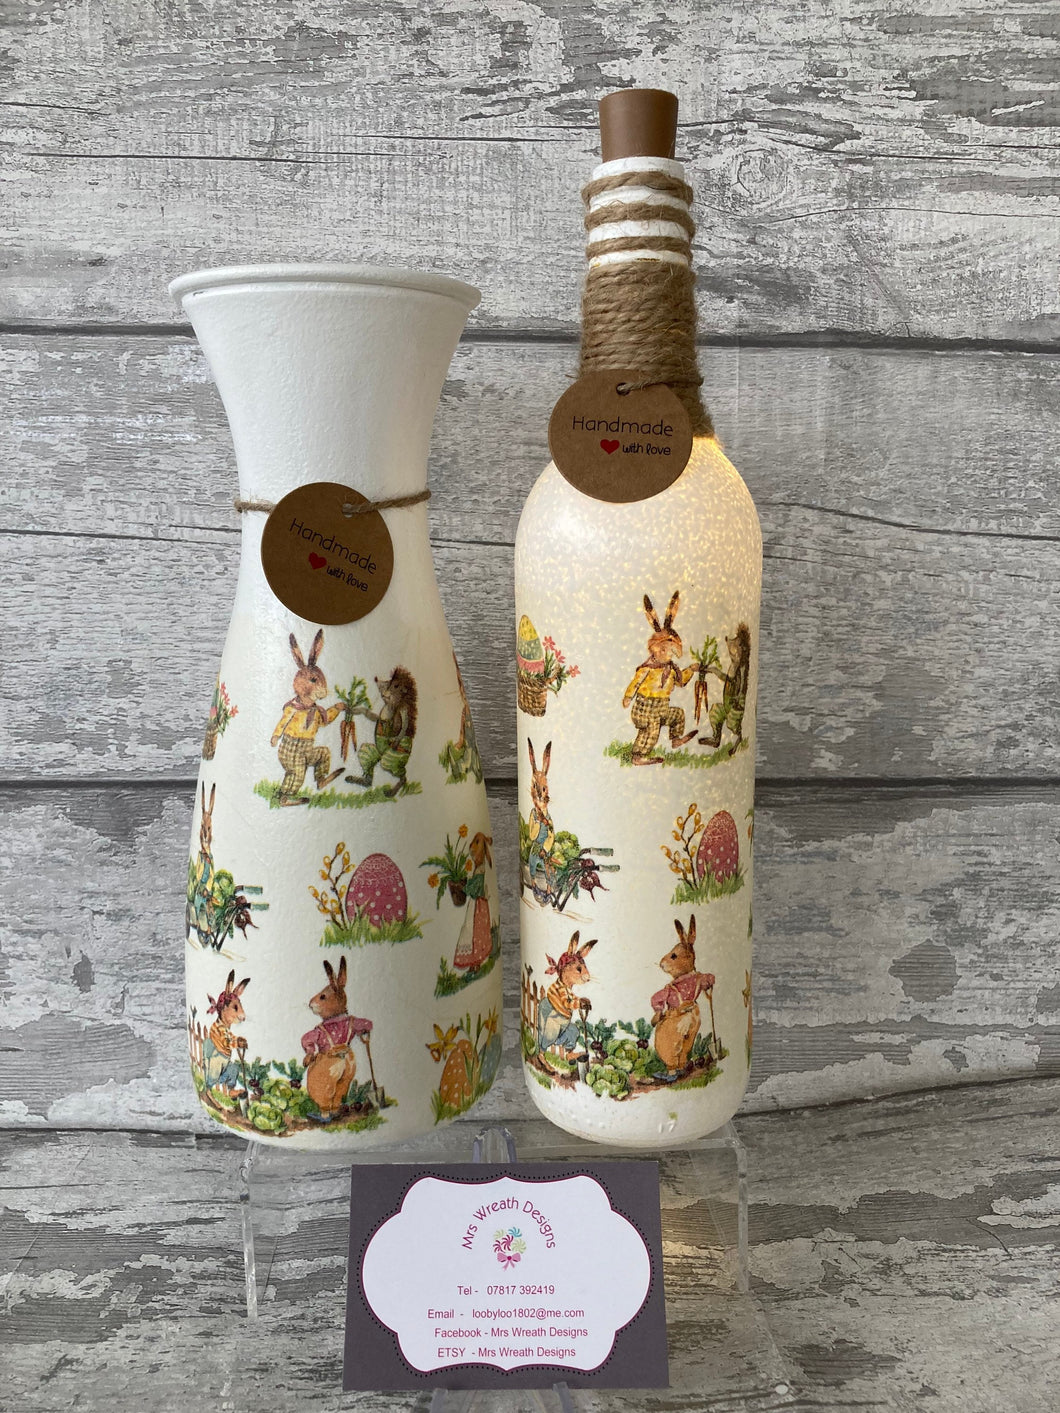 Easter light up bottle and matching vase